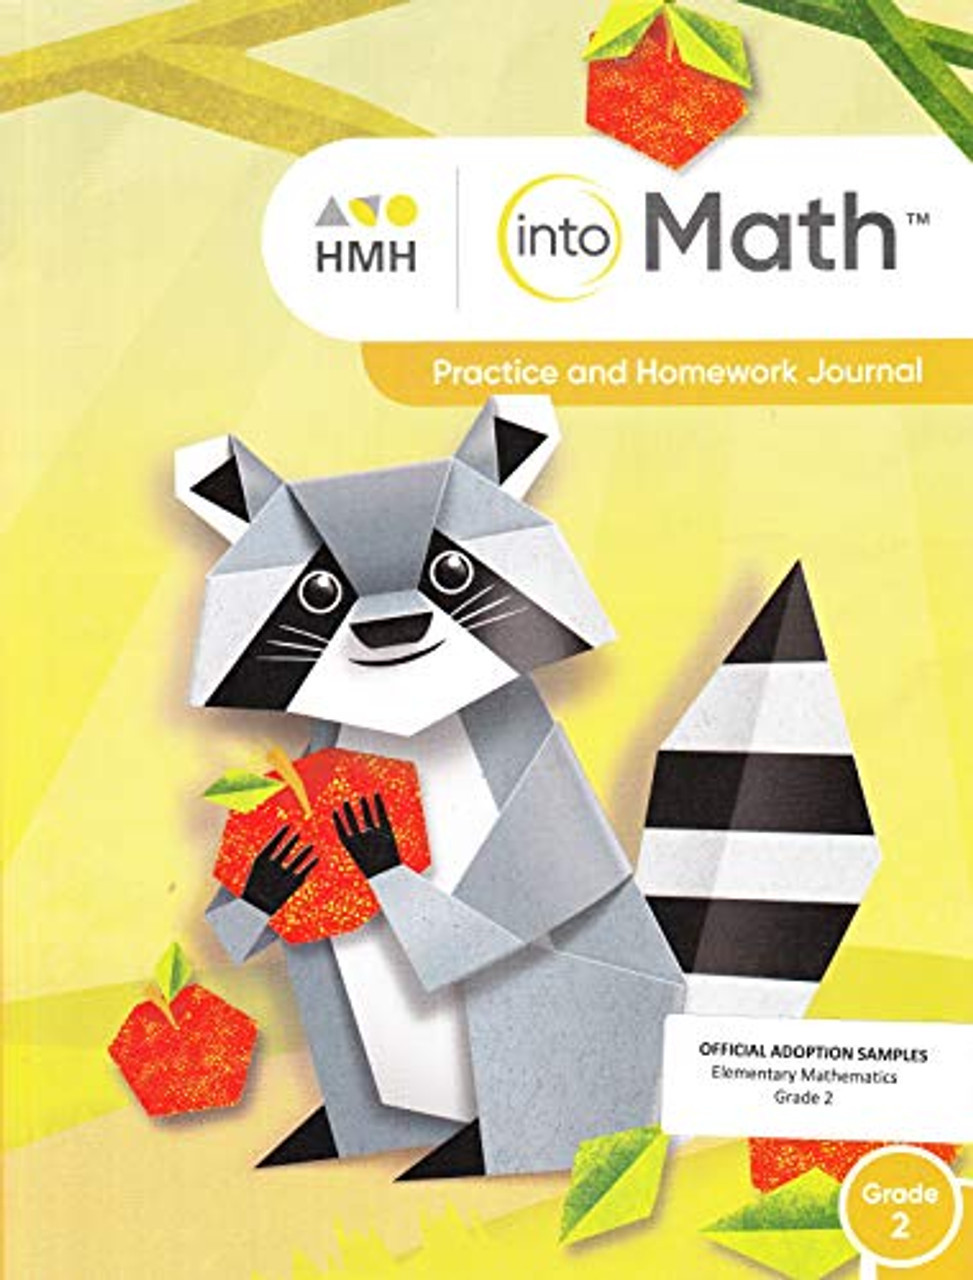 hmh into math practice and homework journal grade 2